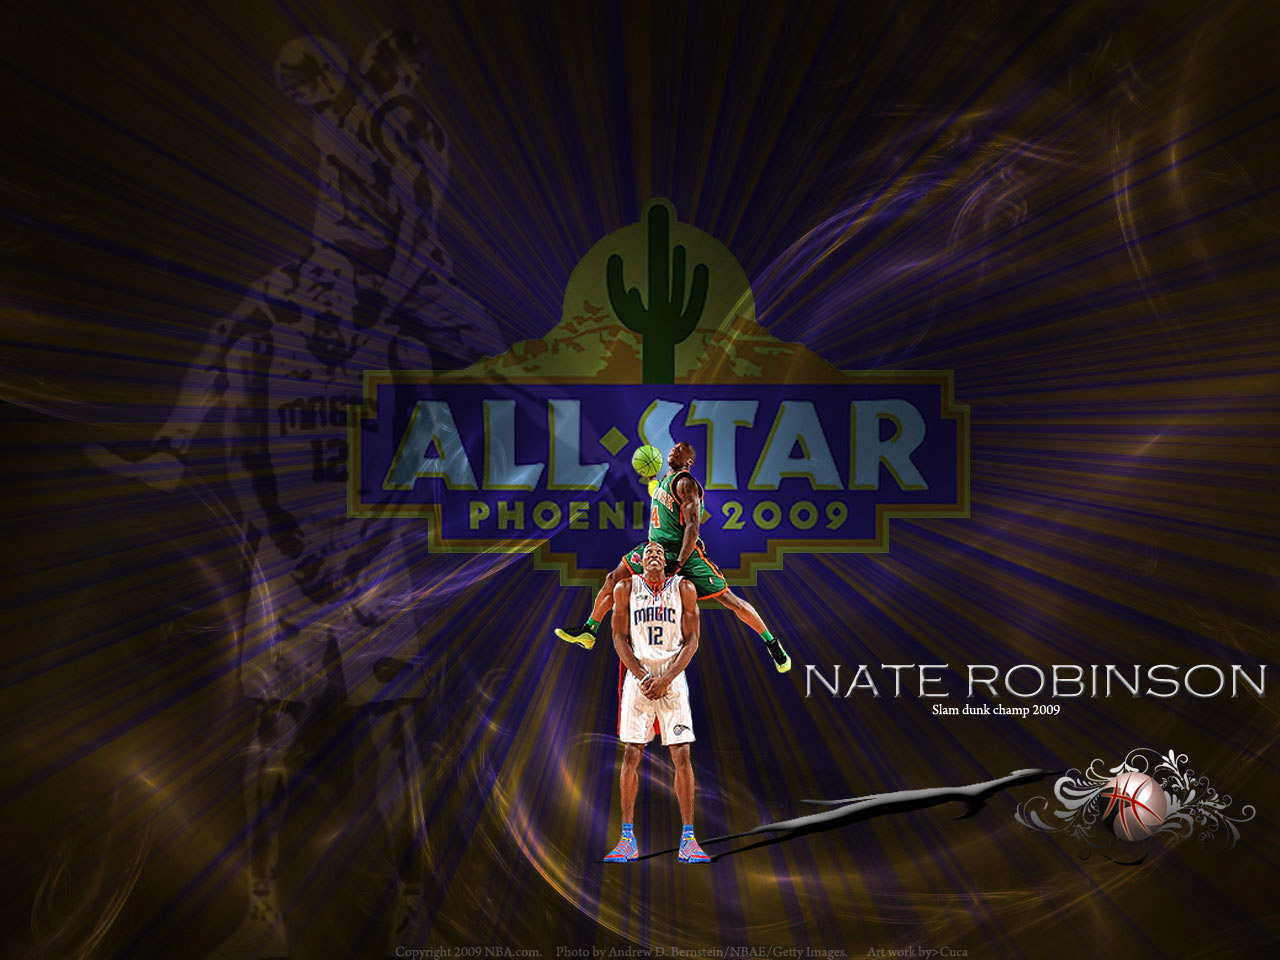 Nate Robinson Slam Dunk Over DH Wallpaper | Basketball Wallpapers ...